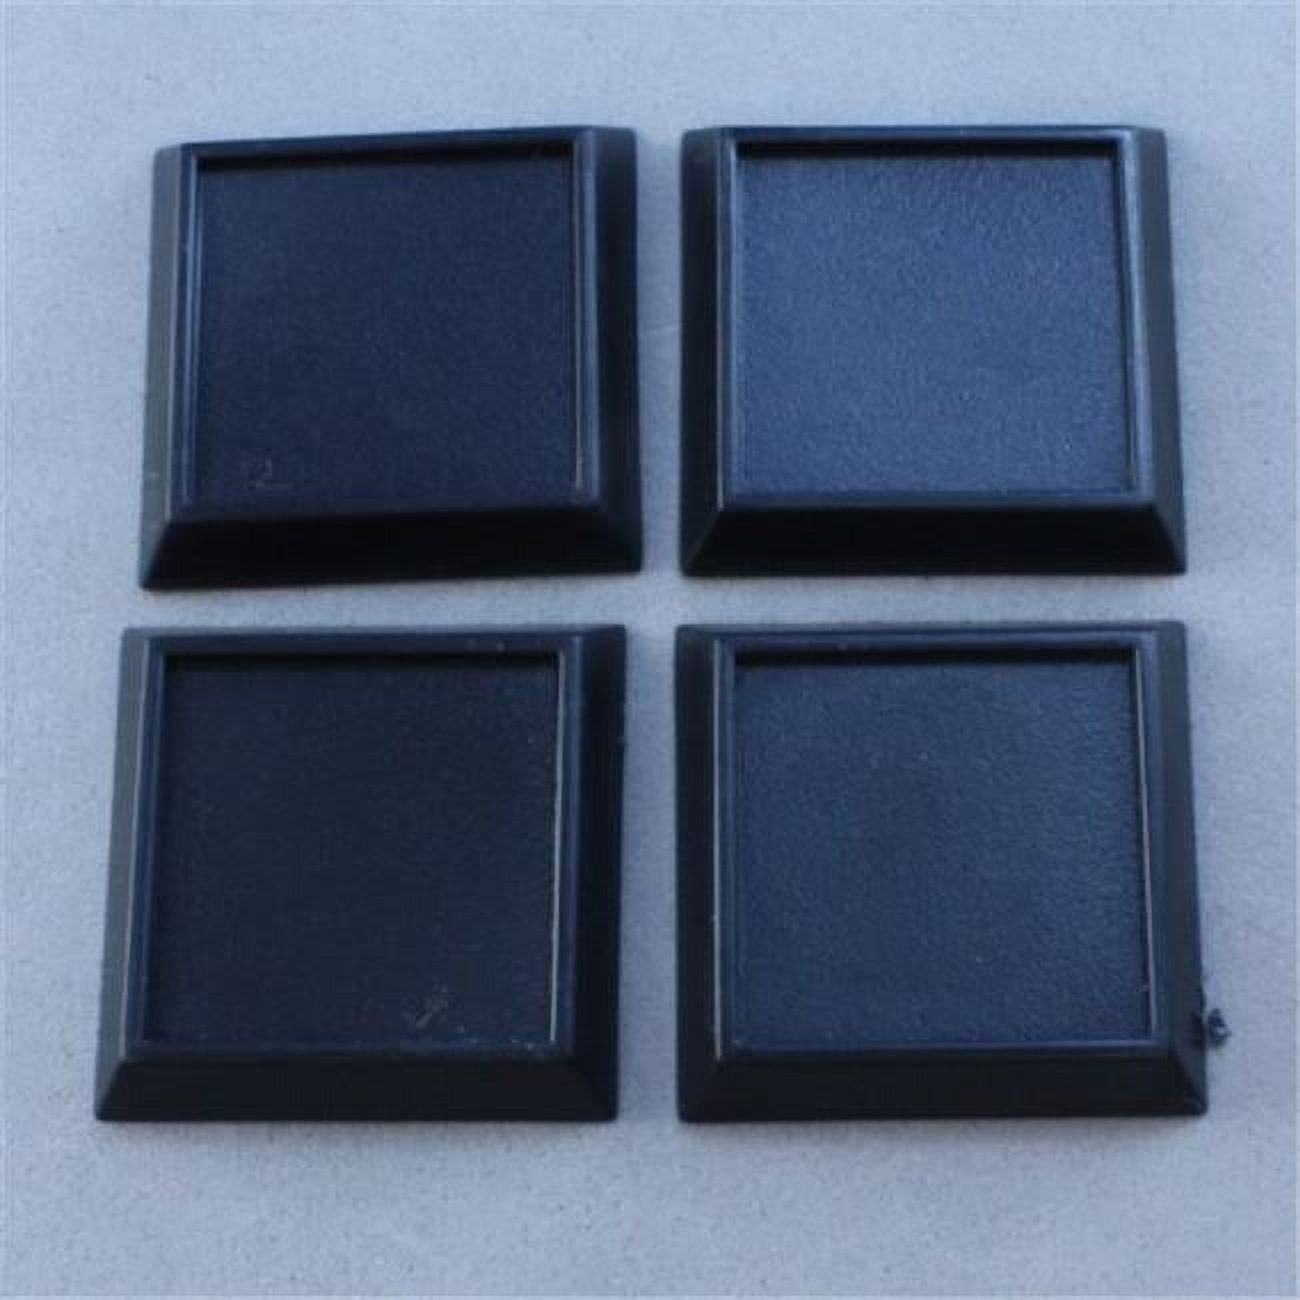 Rem74039 1 In. Square Lippe Plastic Miniature Rpg Base Miniatures, Black - Pack Of 20